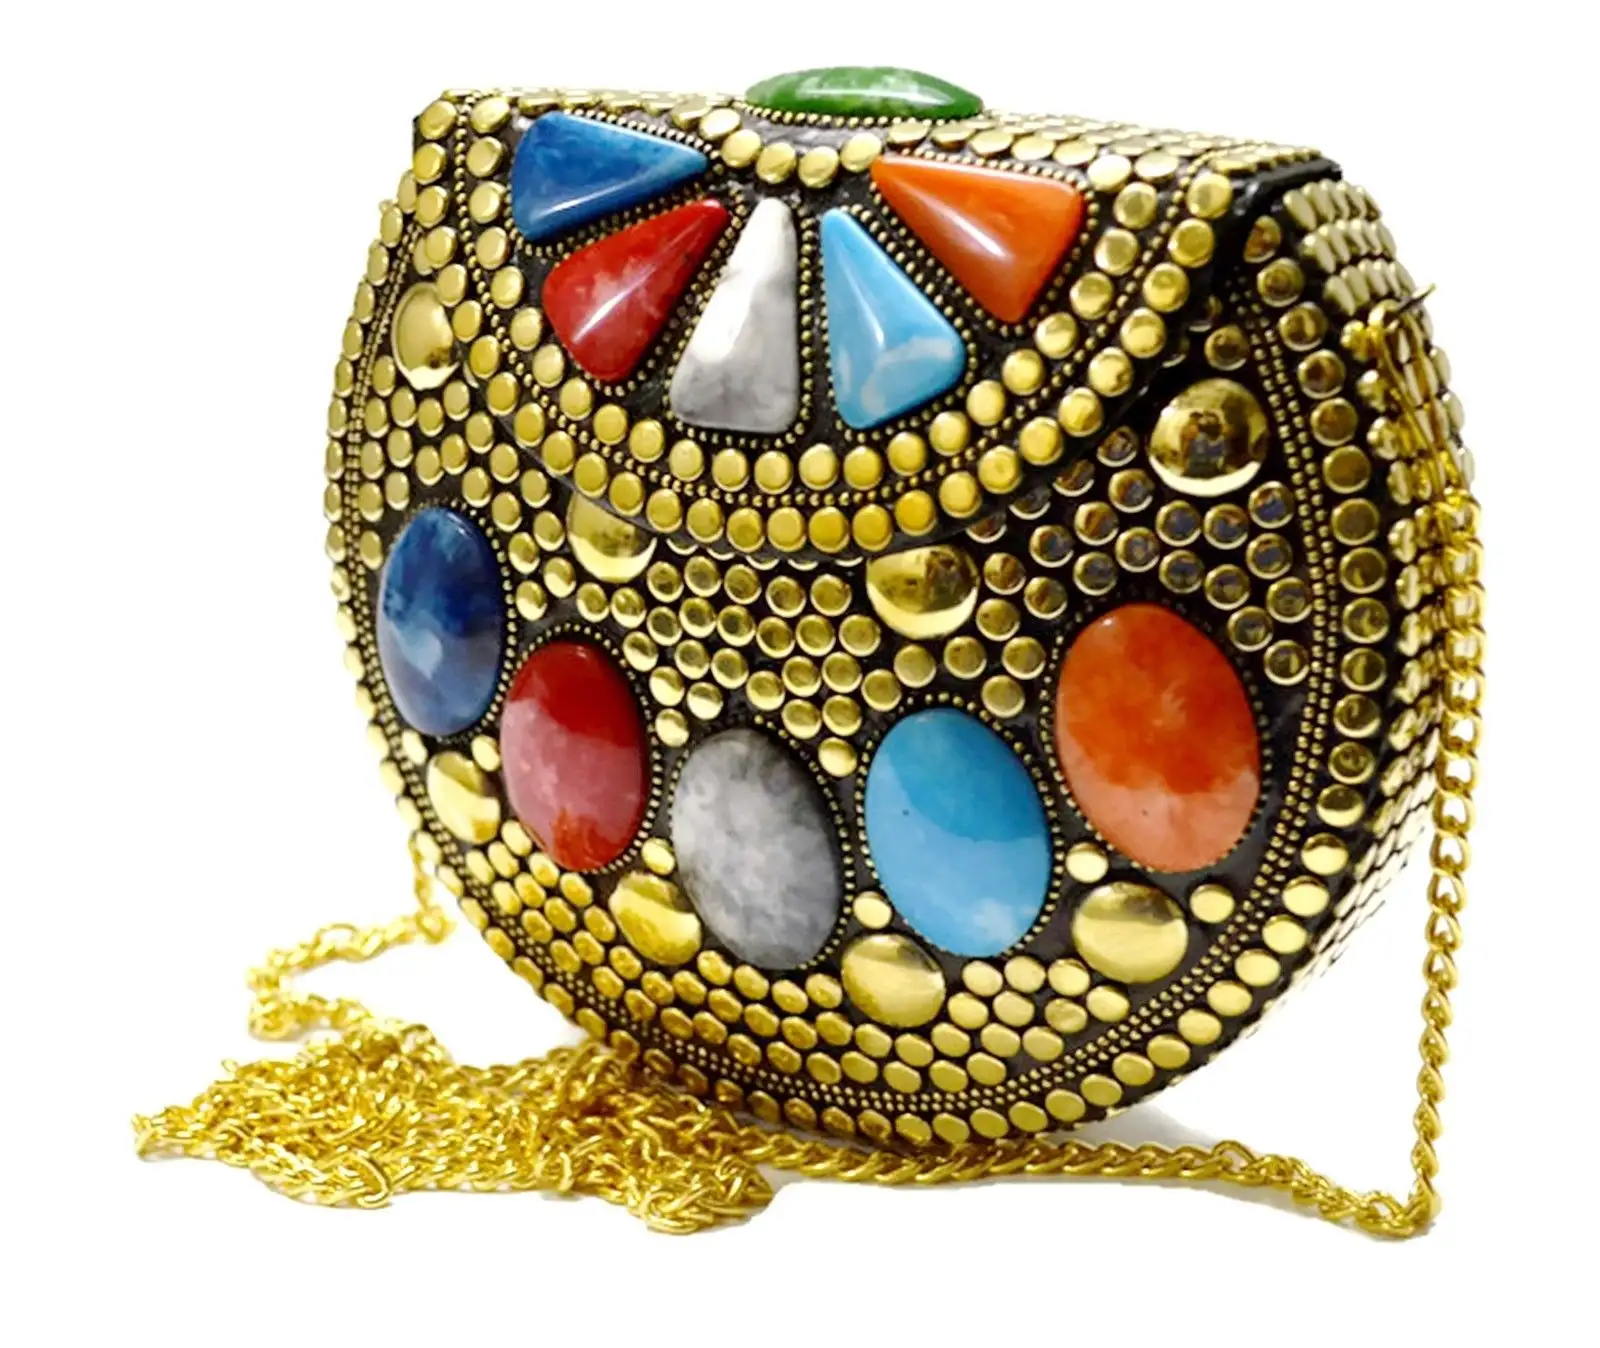 New colorful acrylic stone brass stud metal chain women clutch purse evening bag clutch handbags party bag